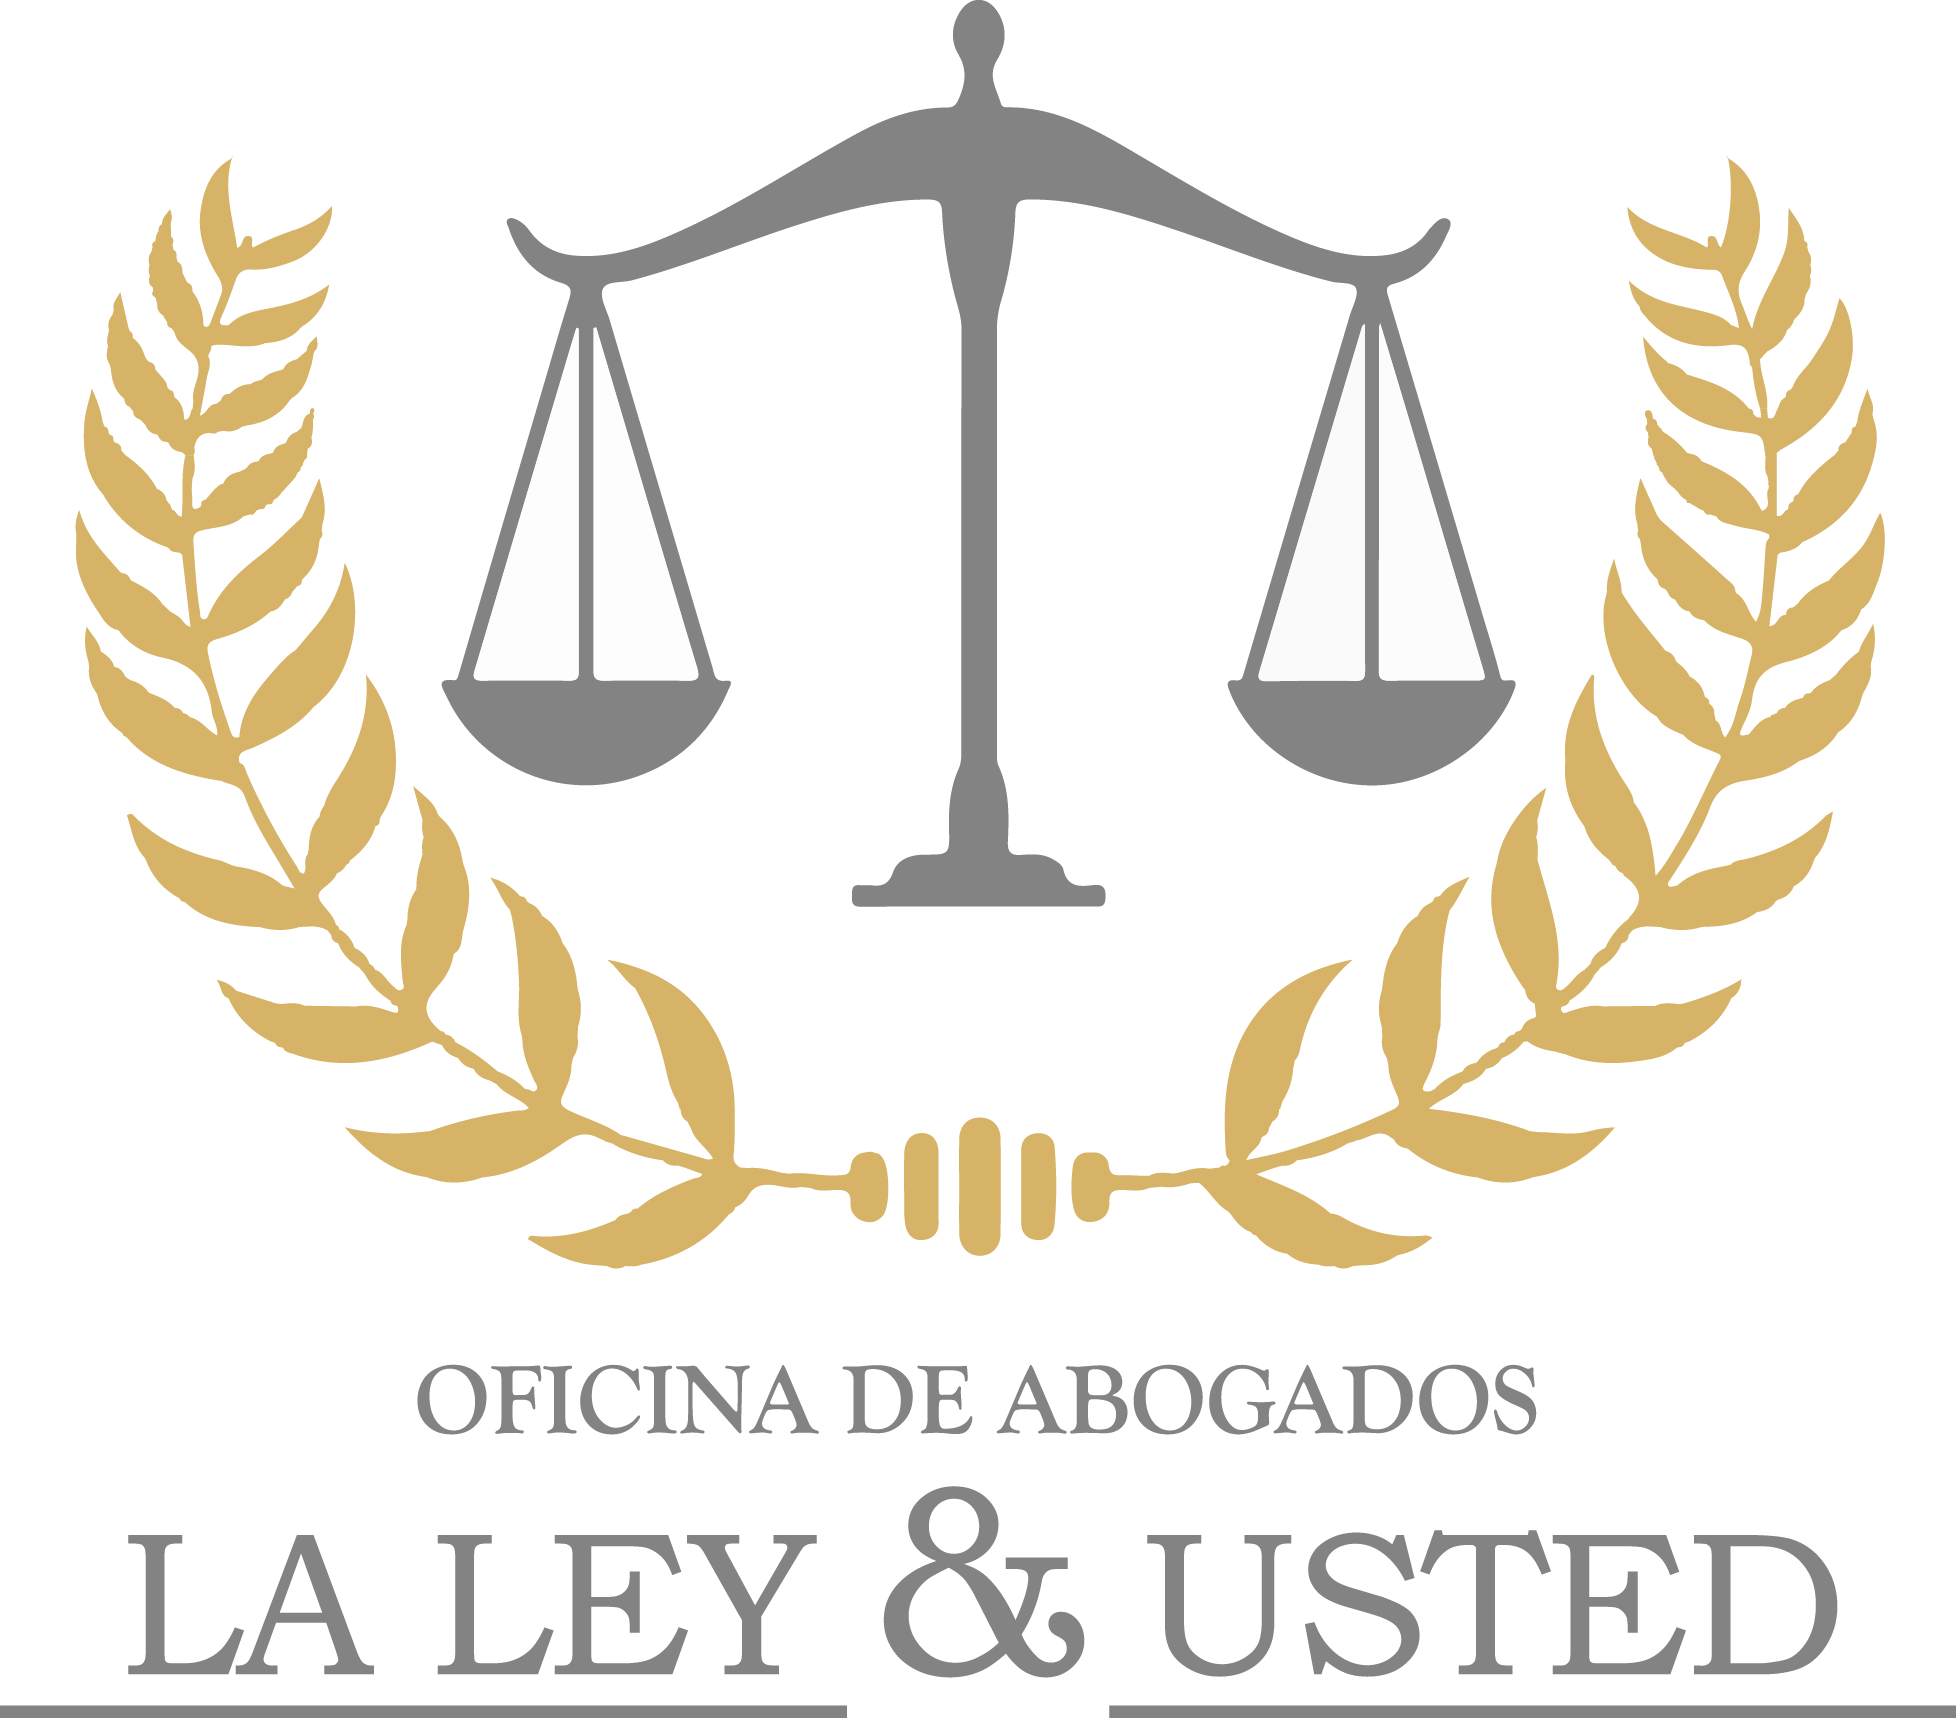 La Ley & Usted